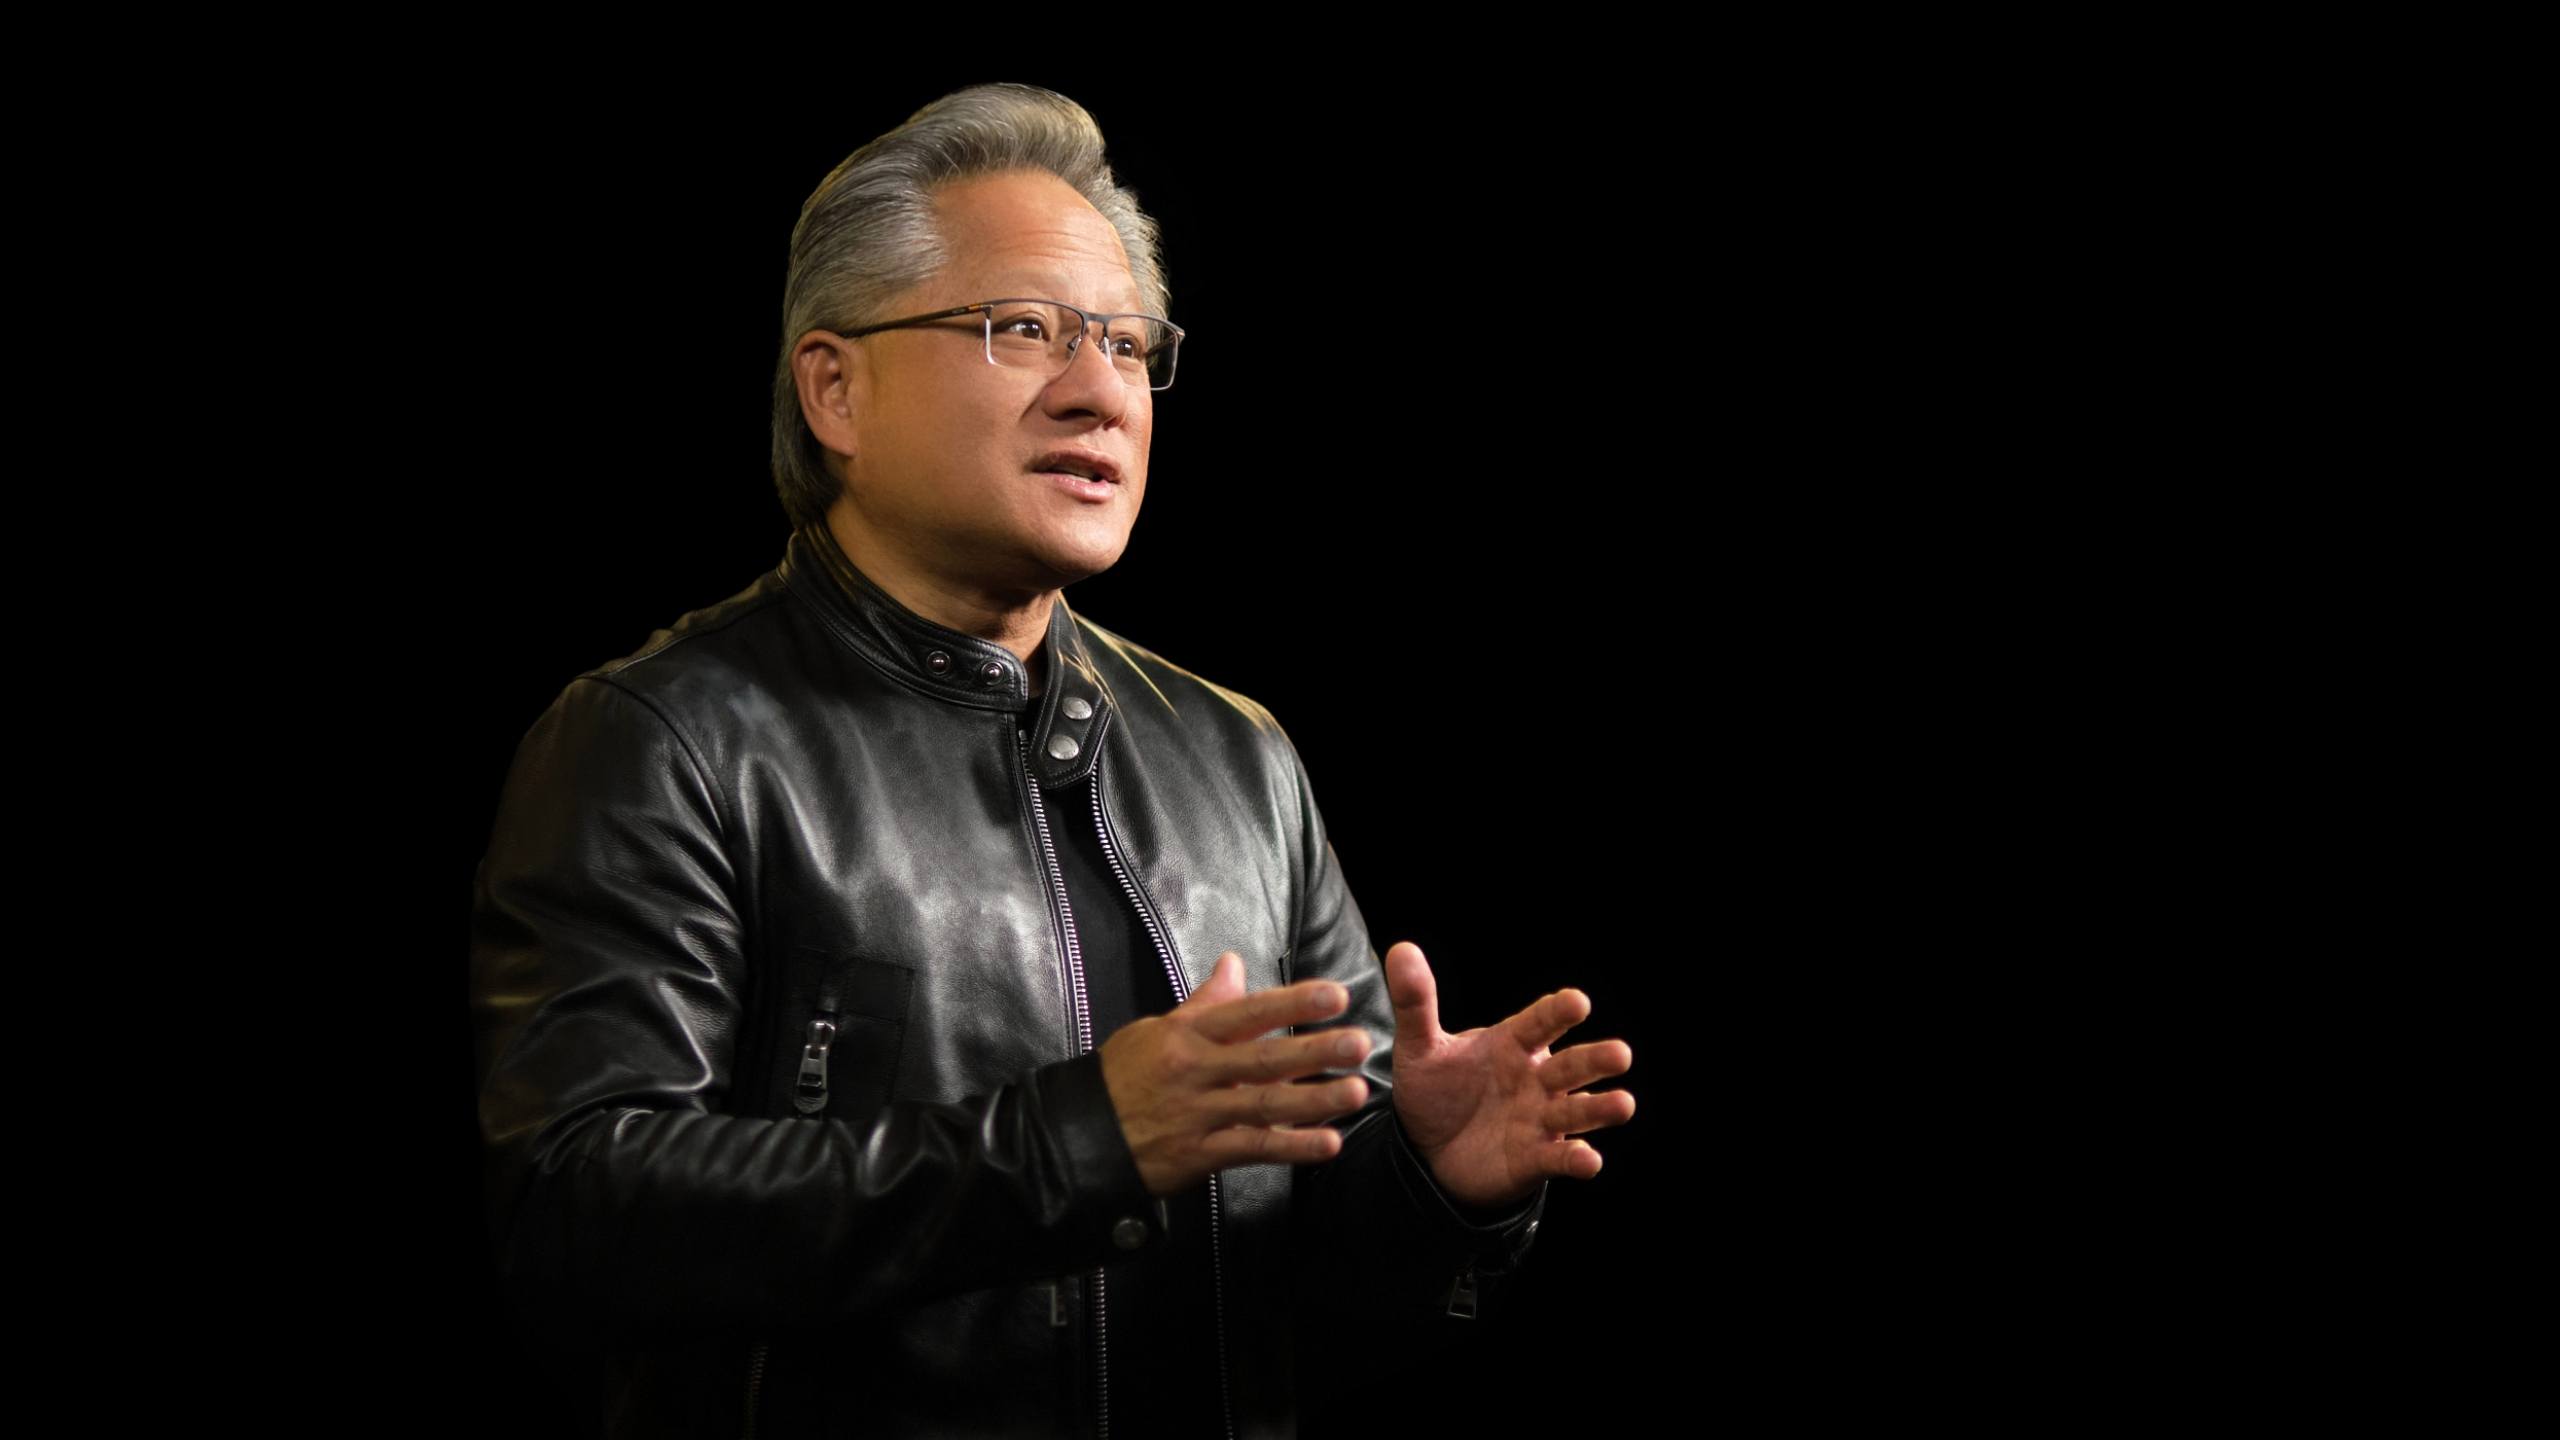 Presentación de Apertura de NVIDIA GTC 2023 con el Director Ejecutivo Jensen Huang